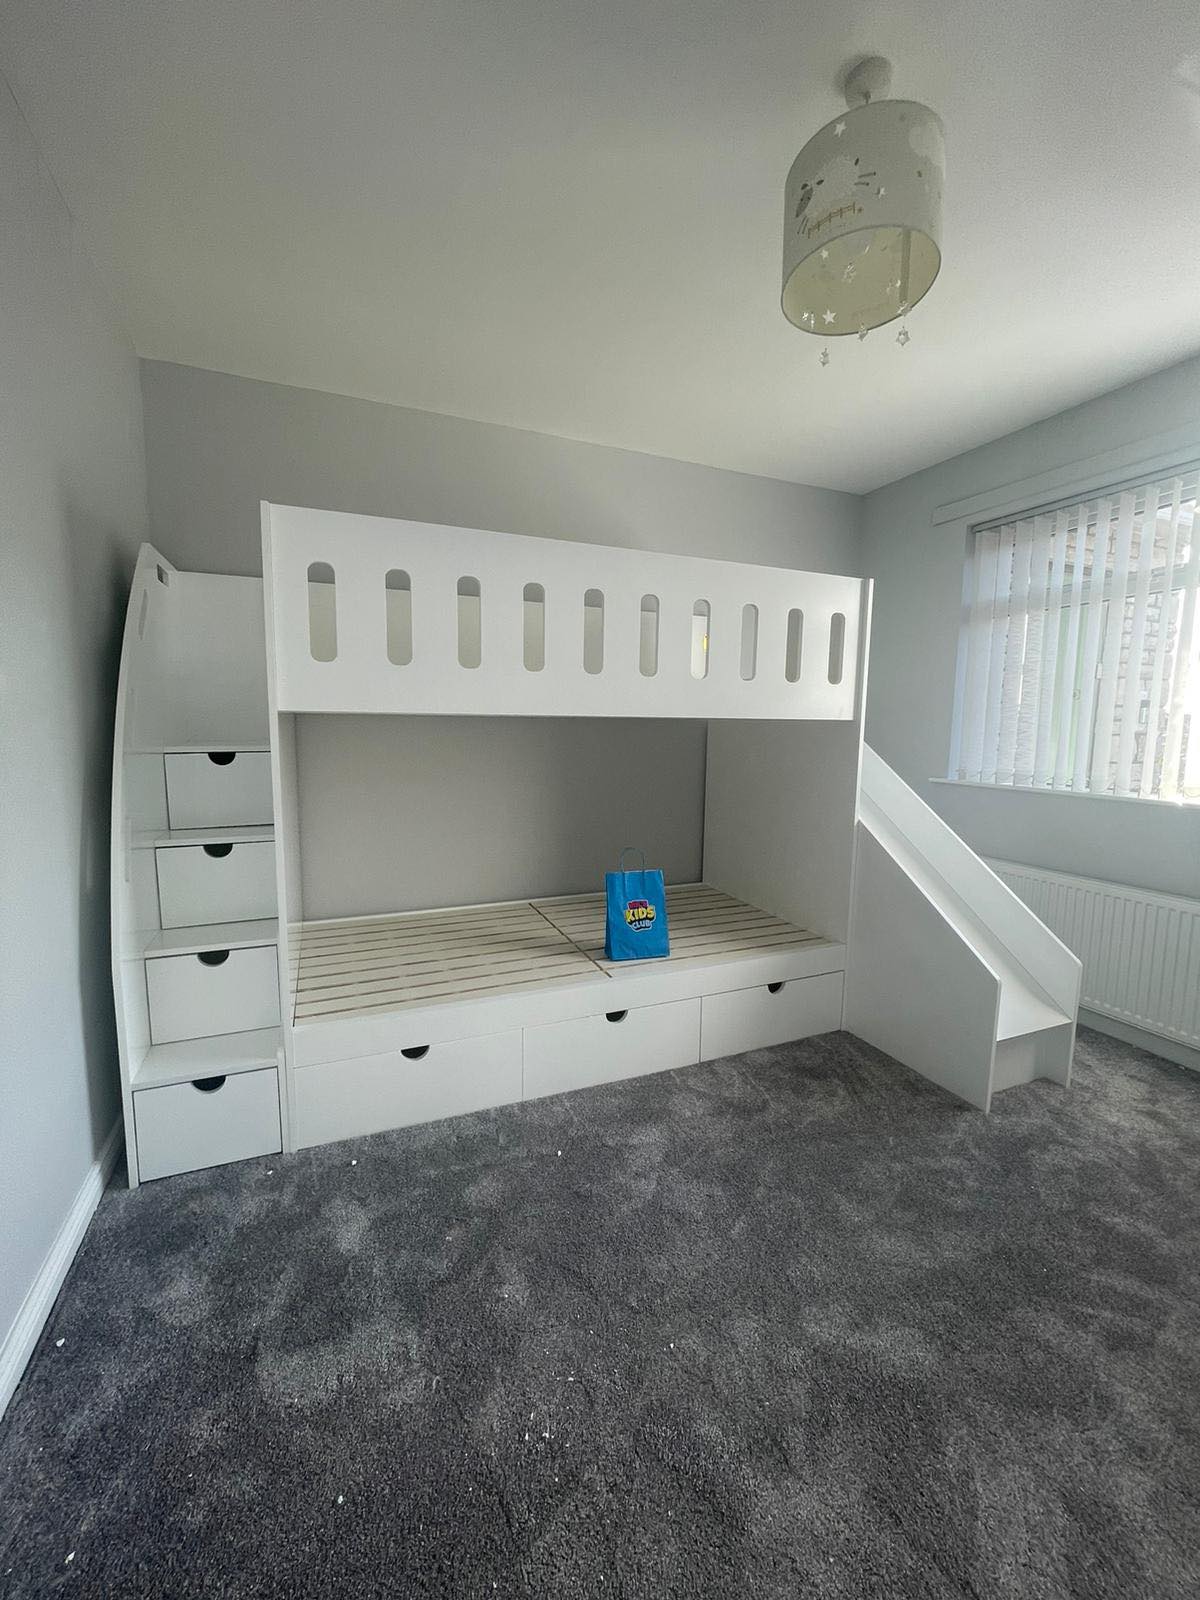 double bunk beds uk-6f0e2401